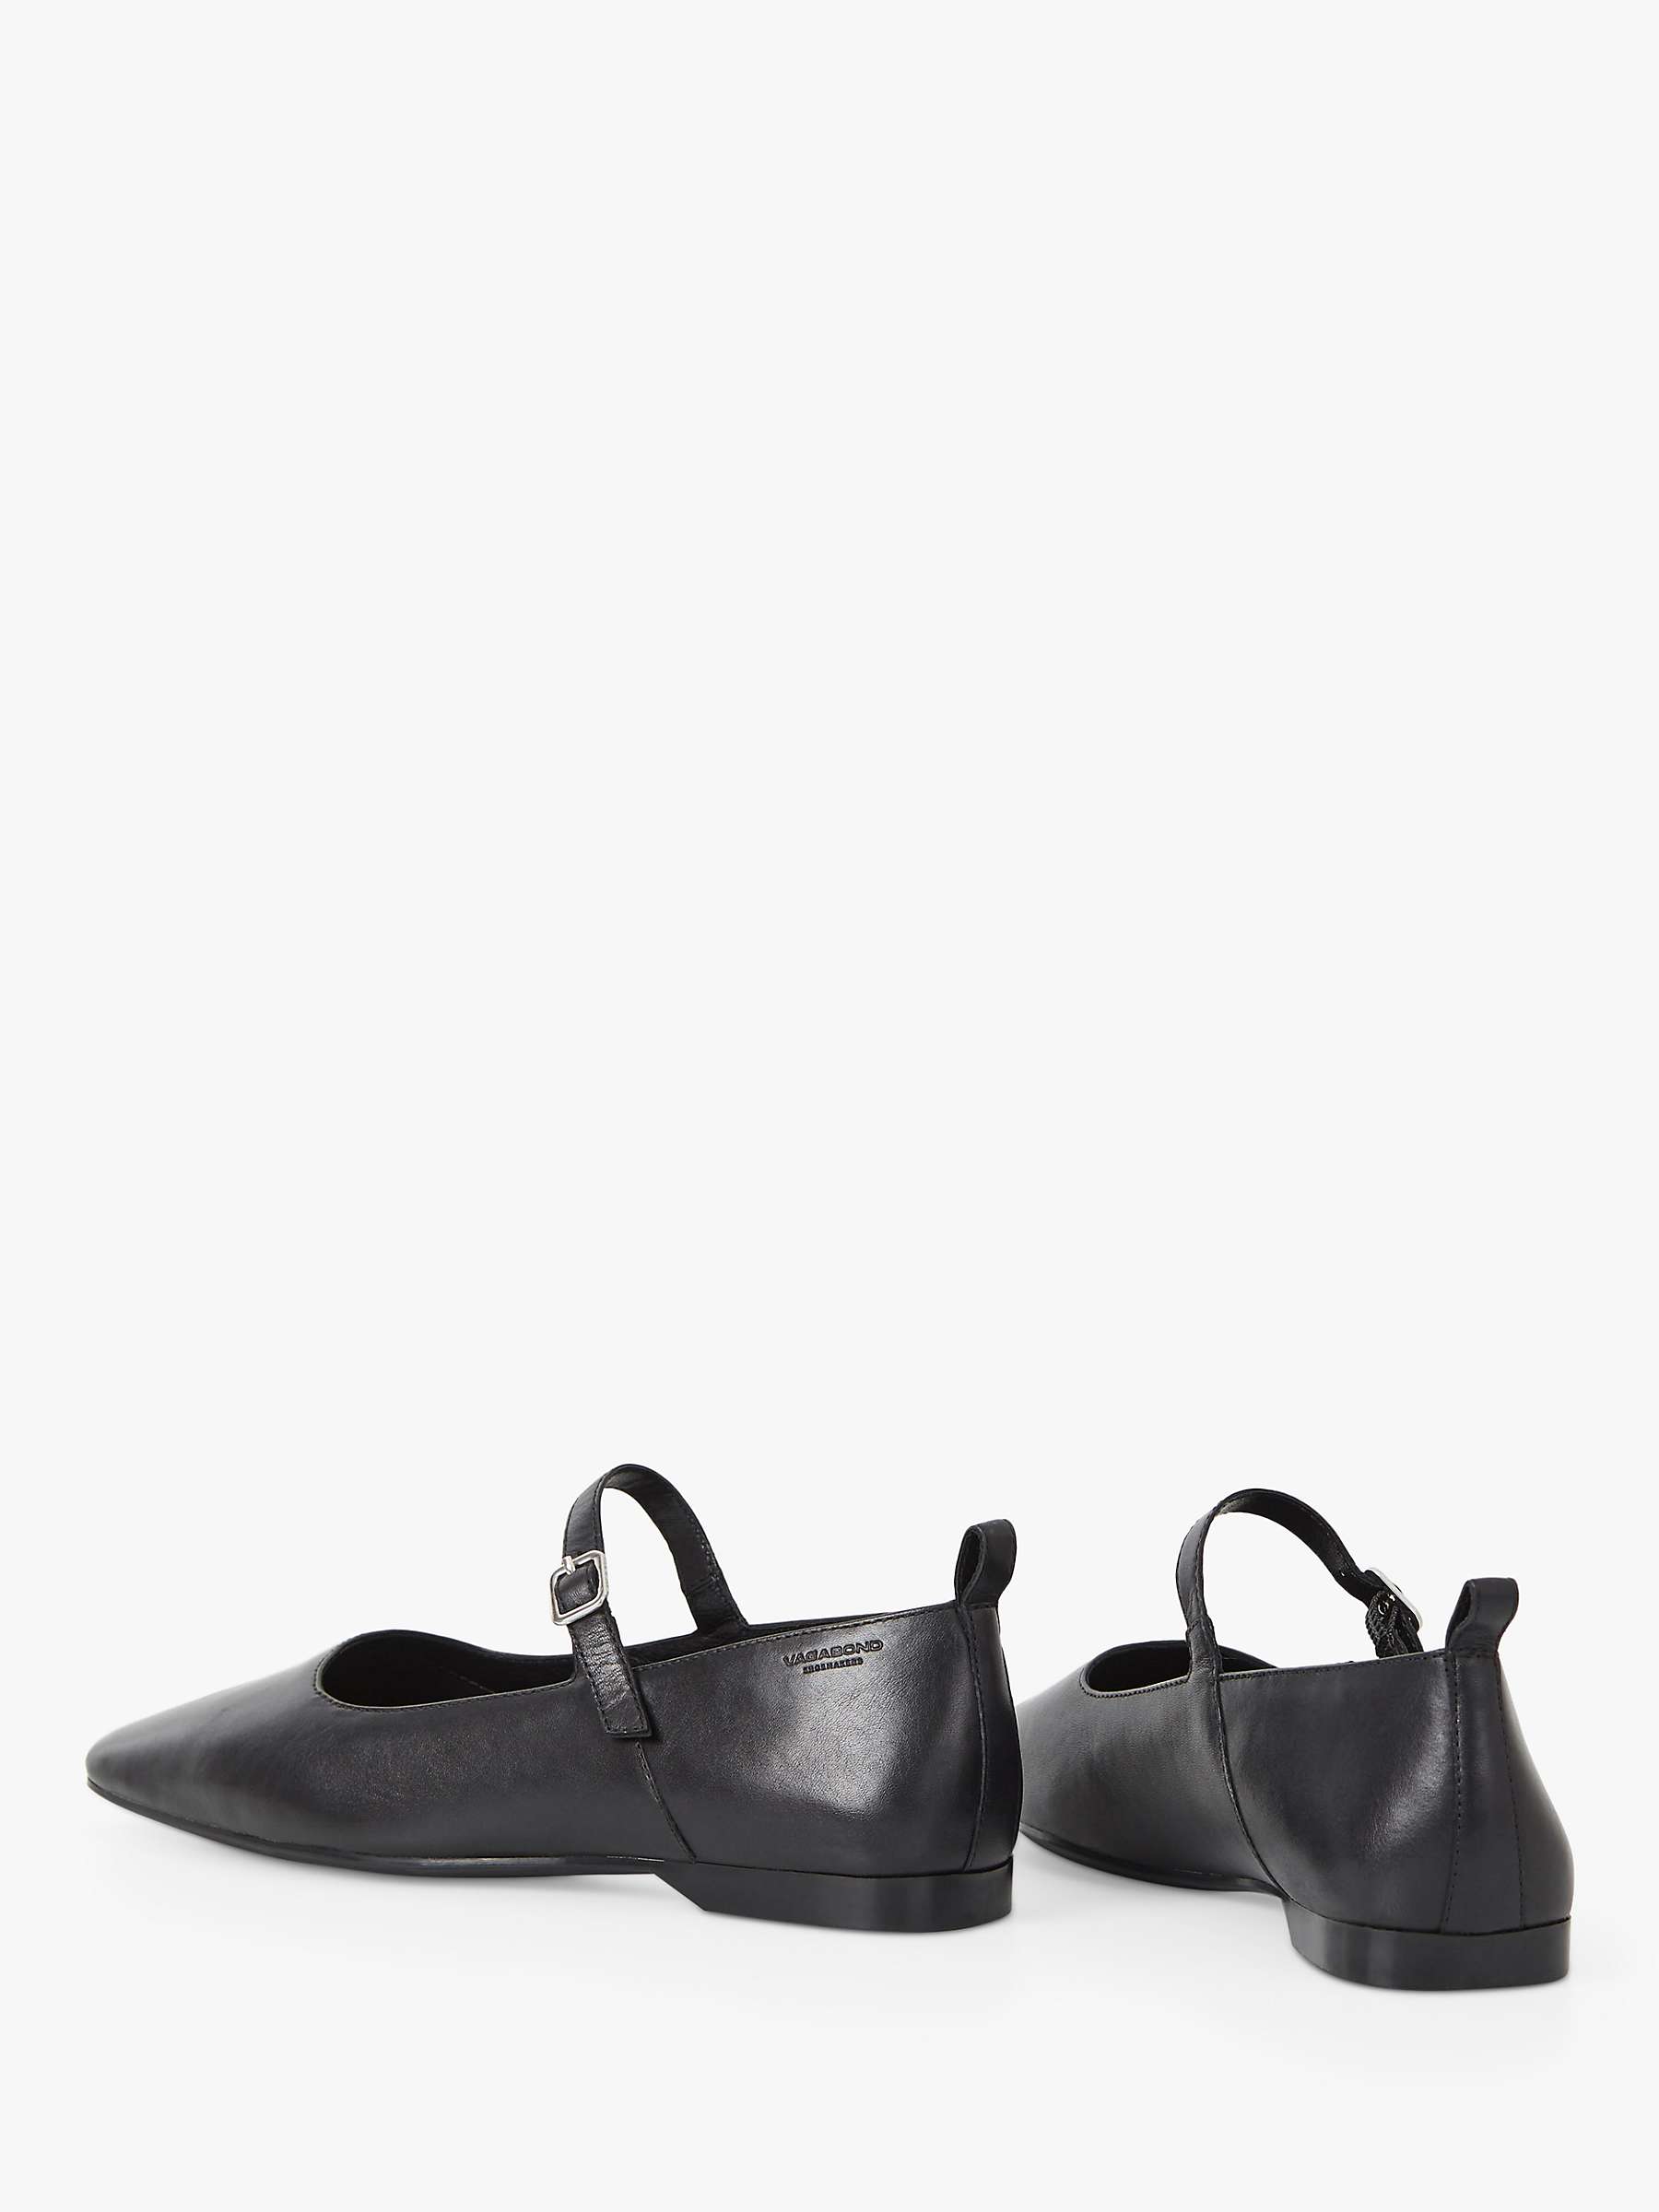 Buy Vagabond Shoemakers Delia Leather Flat Mary Jane Shoes, Black Online at johnlewis.com